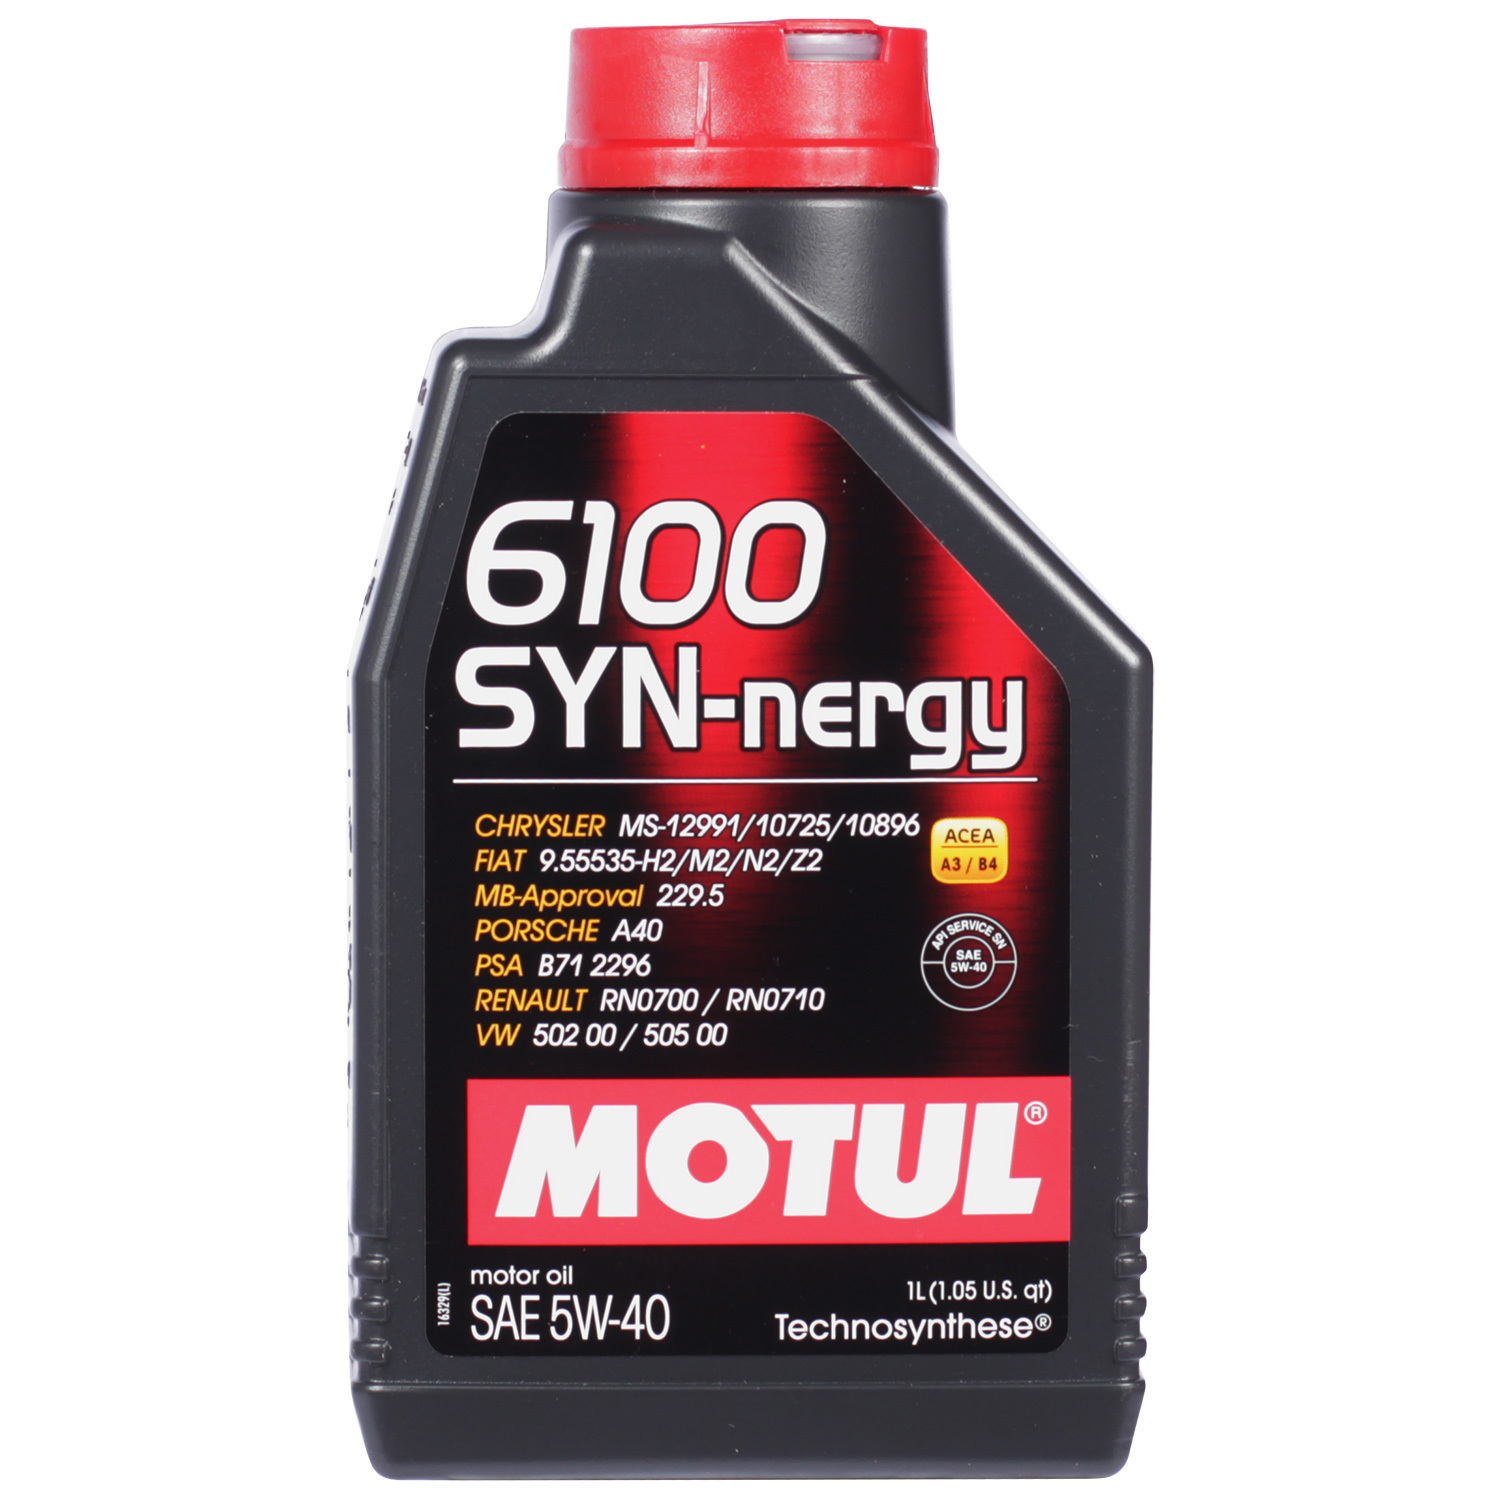 Motul Моторное масло Motul 6100 SYN-NERGY 5W-40, 1 л масло моторное motul 6100 syn clean 5w 30 5 л 107948